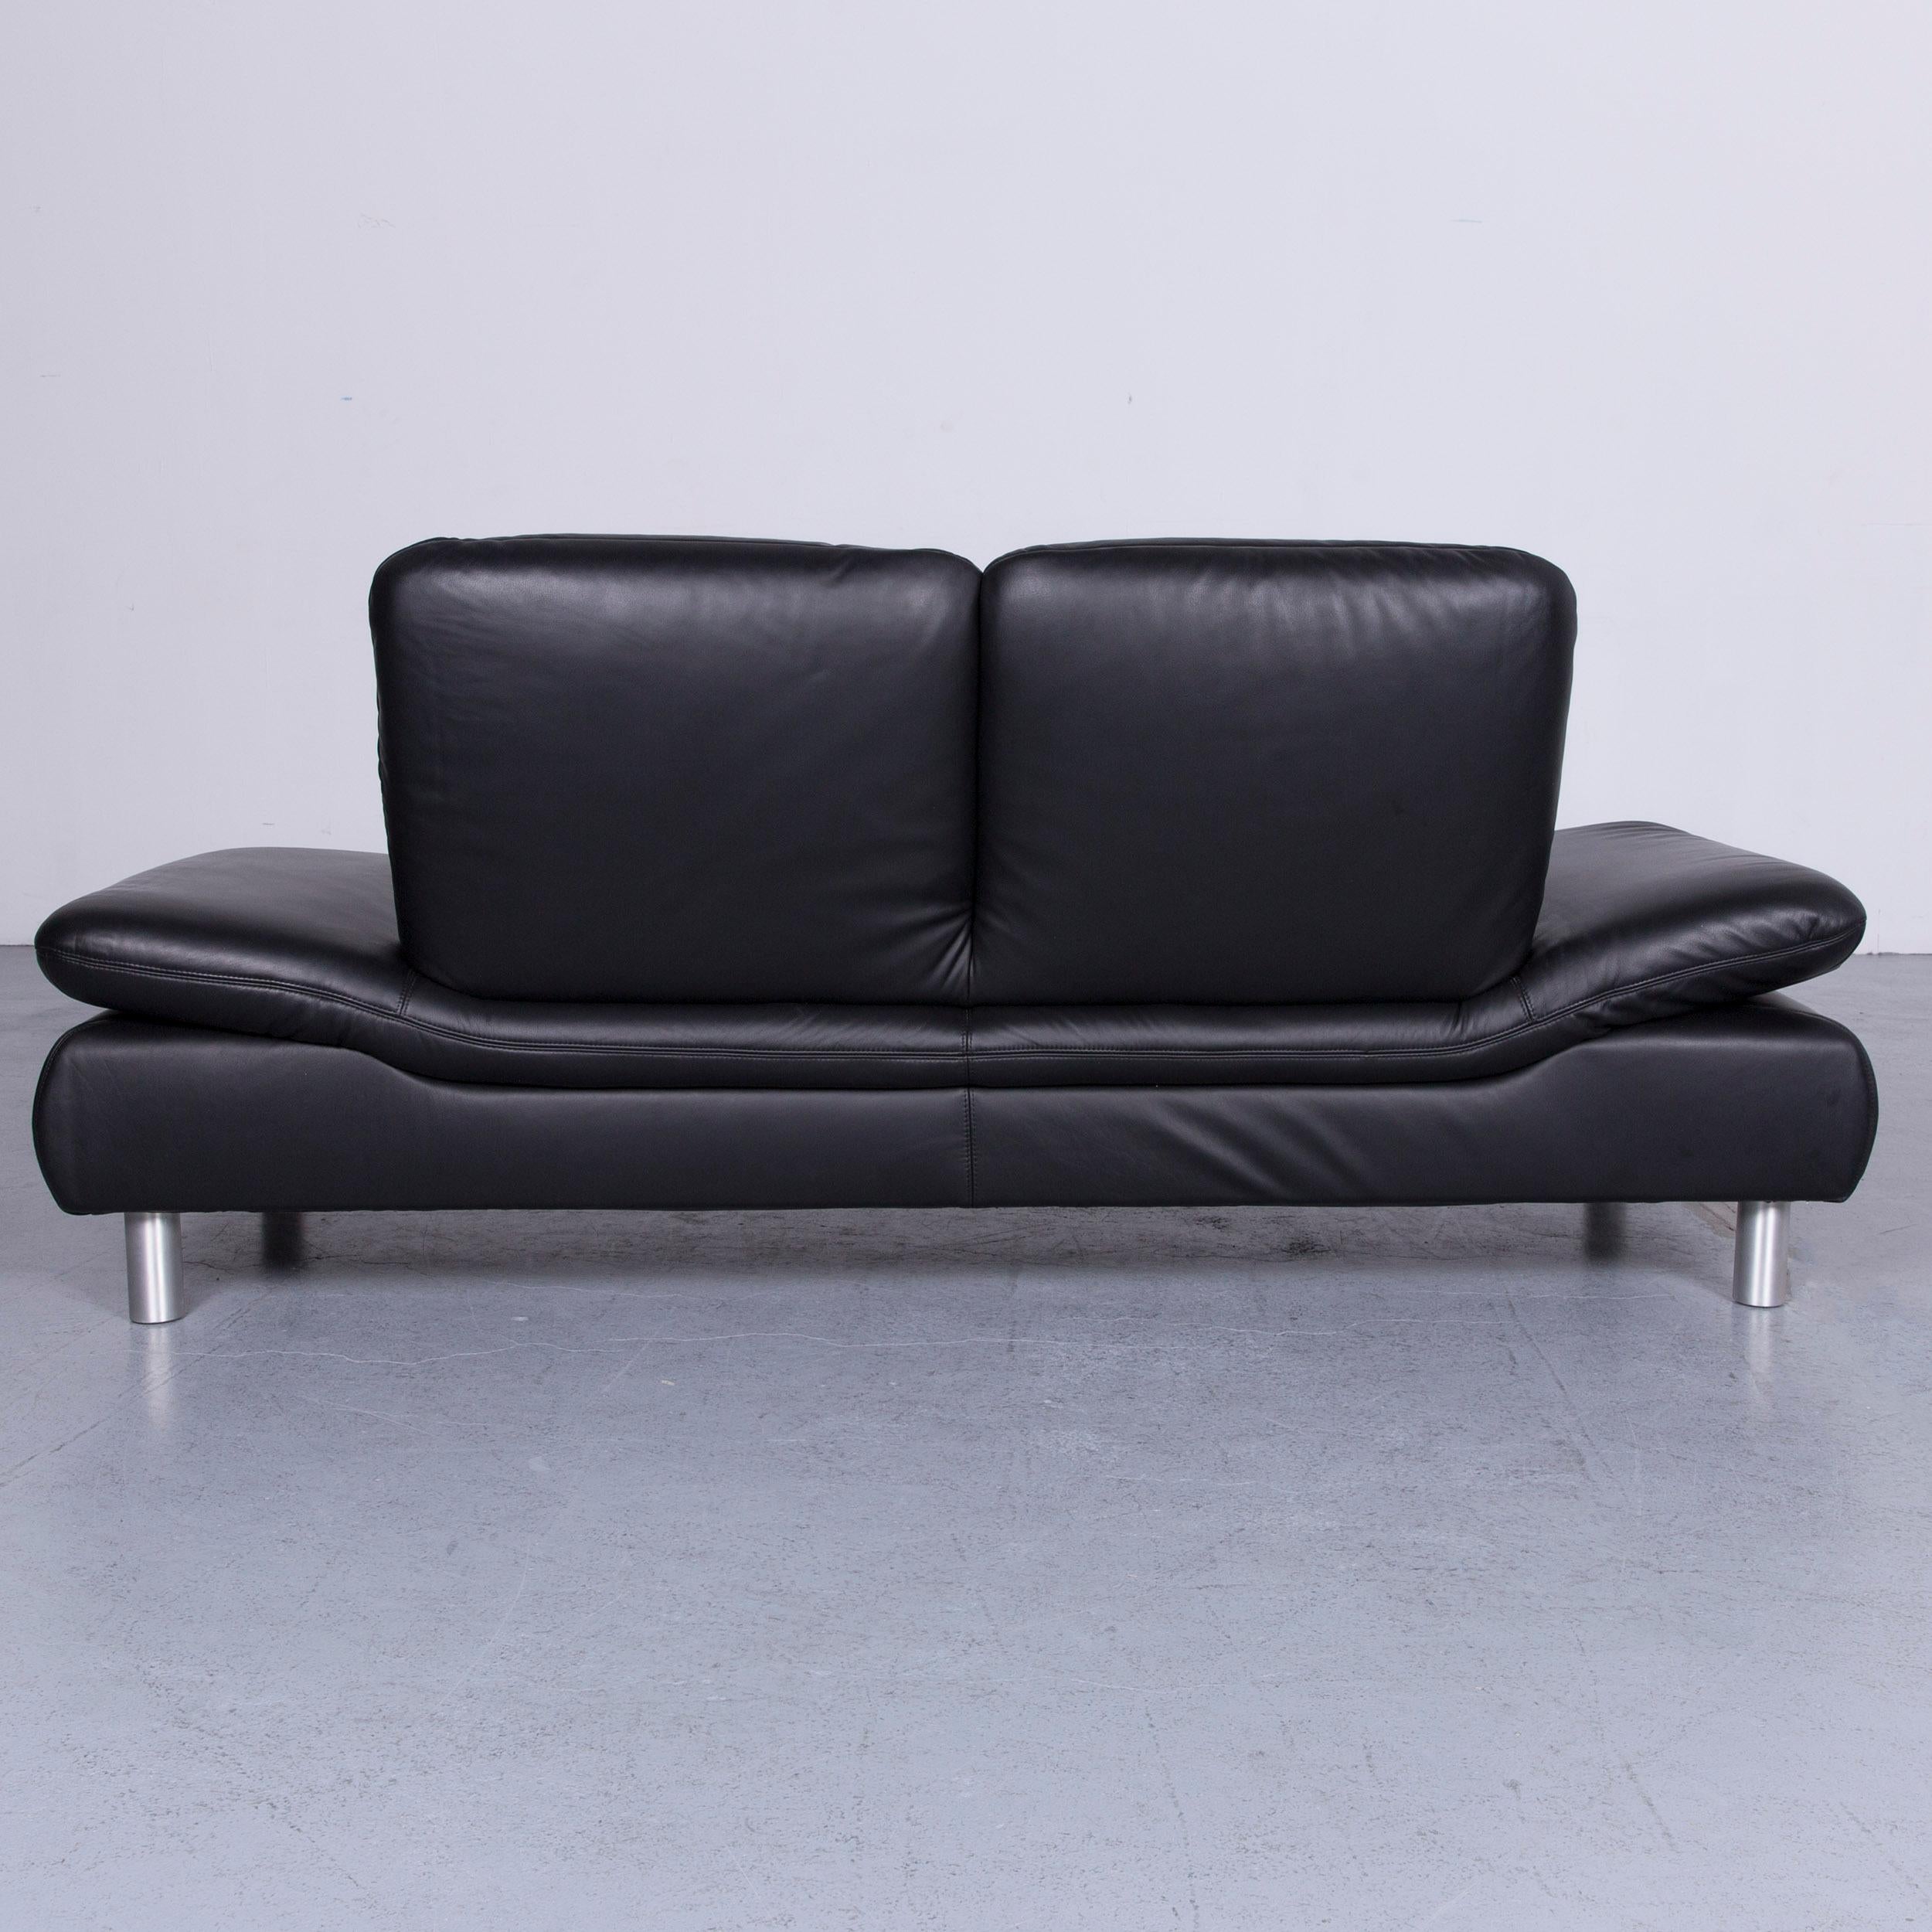 Koinor Rivoli Designer Leather Three-Seat Sofa in Black with Functions 4